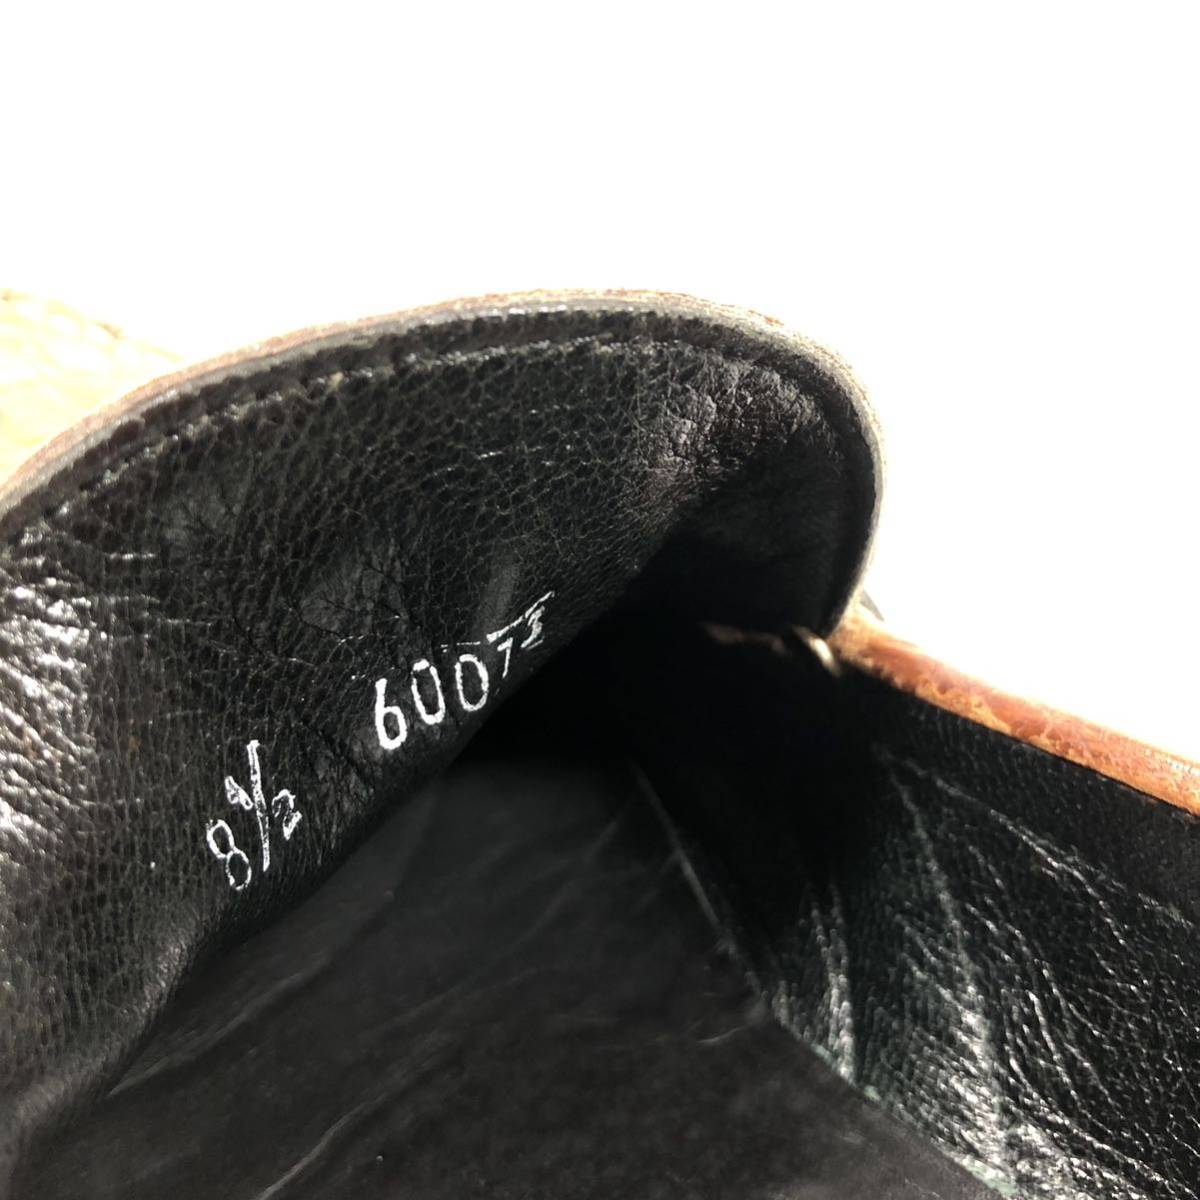 [a* тест -ni] подлинный товар a.testoni обувь 27.5cm чай общий крокодил Loafer туфли без застежки бизнес обувь wani кожа мужской сделано в Италии 8 1/2 M